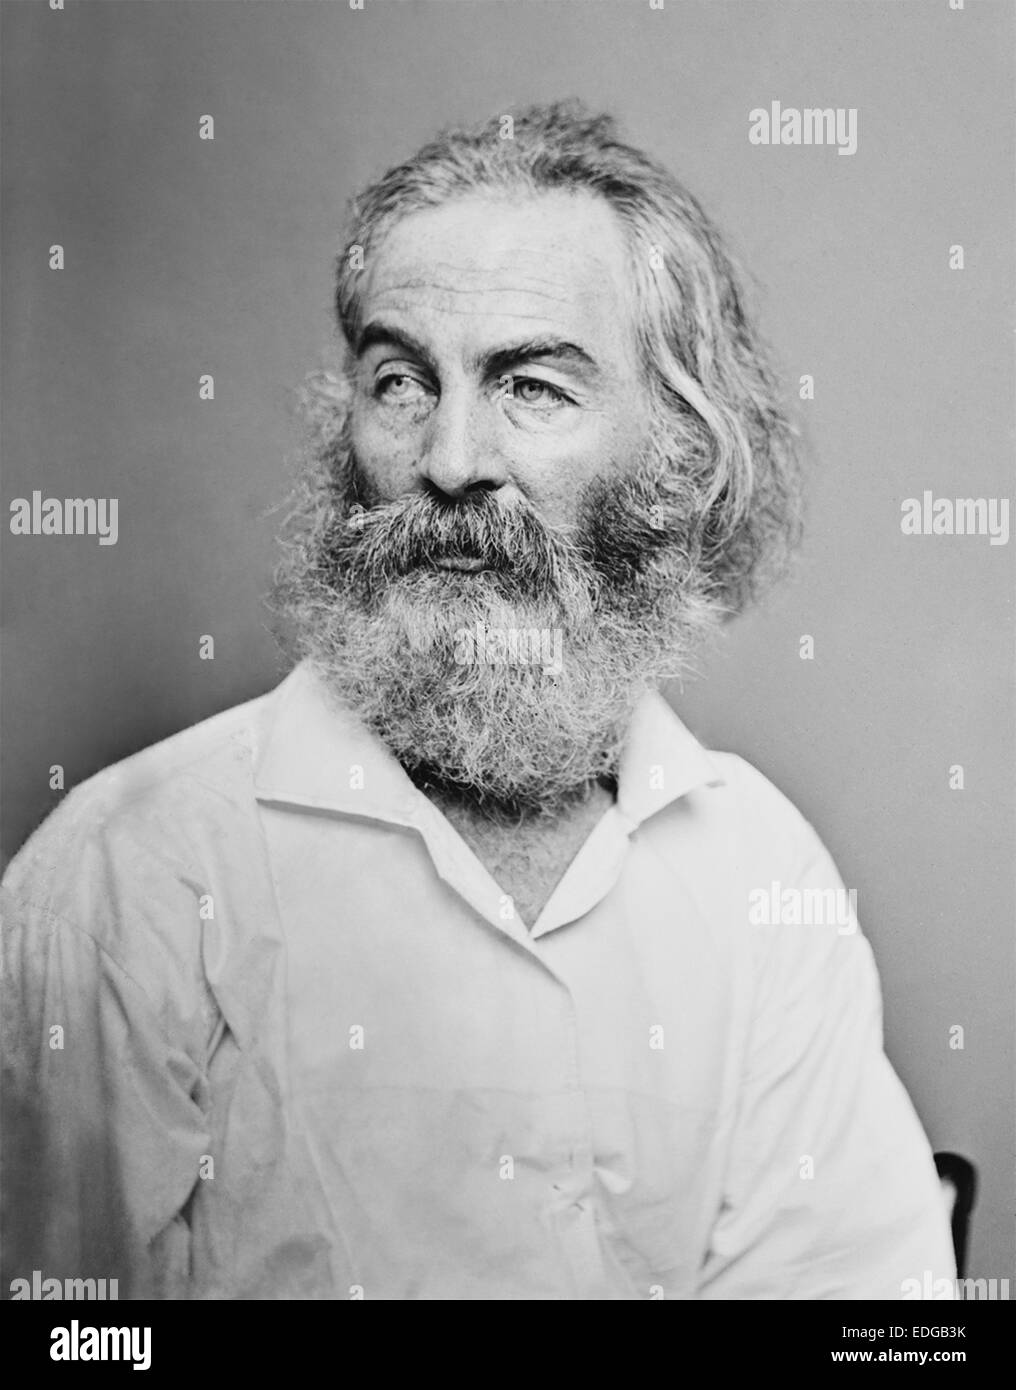 American poet, essayist and journalist Walt Whitman photographed by Mathew Brady in 1866. Stock Photo